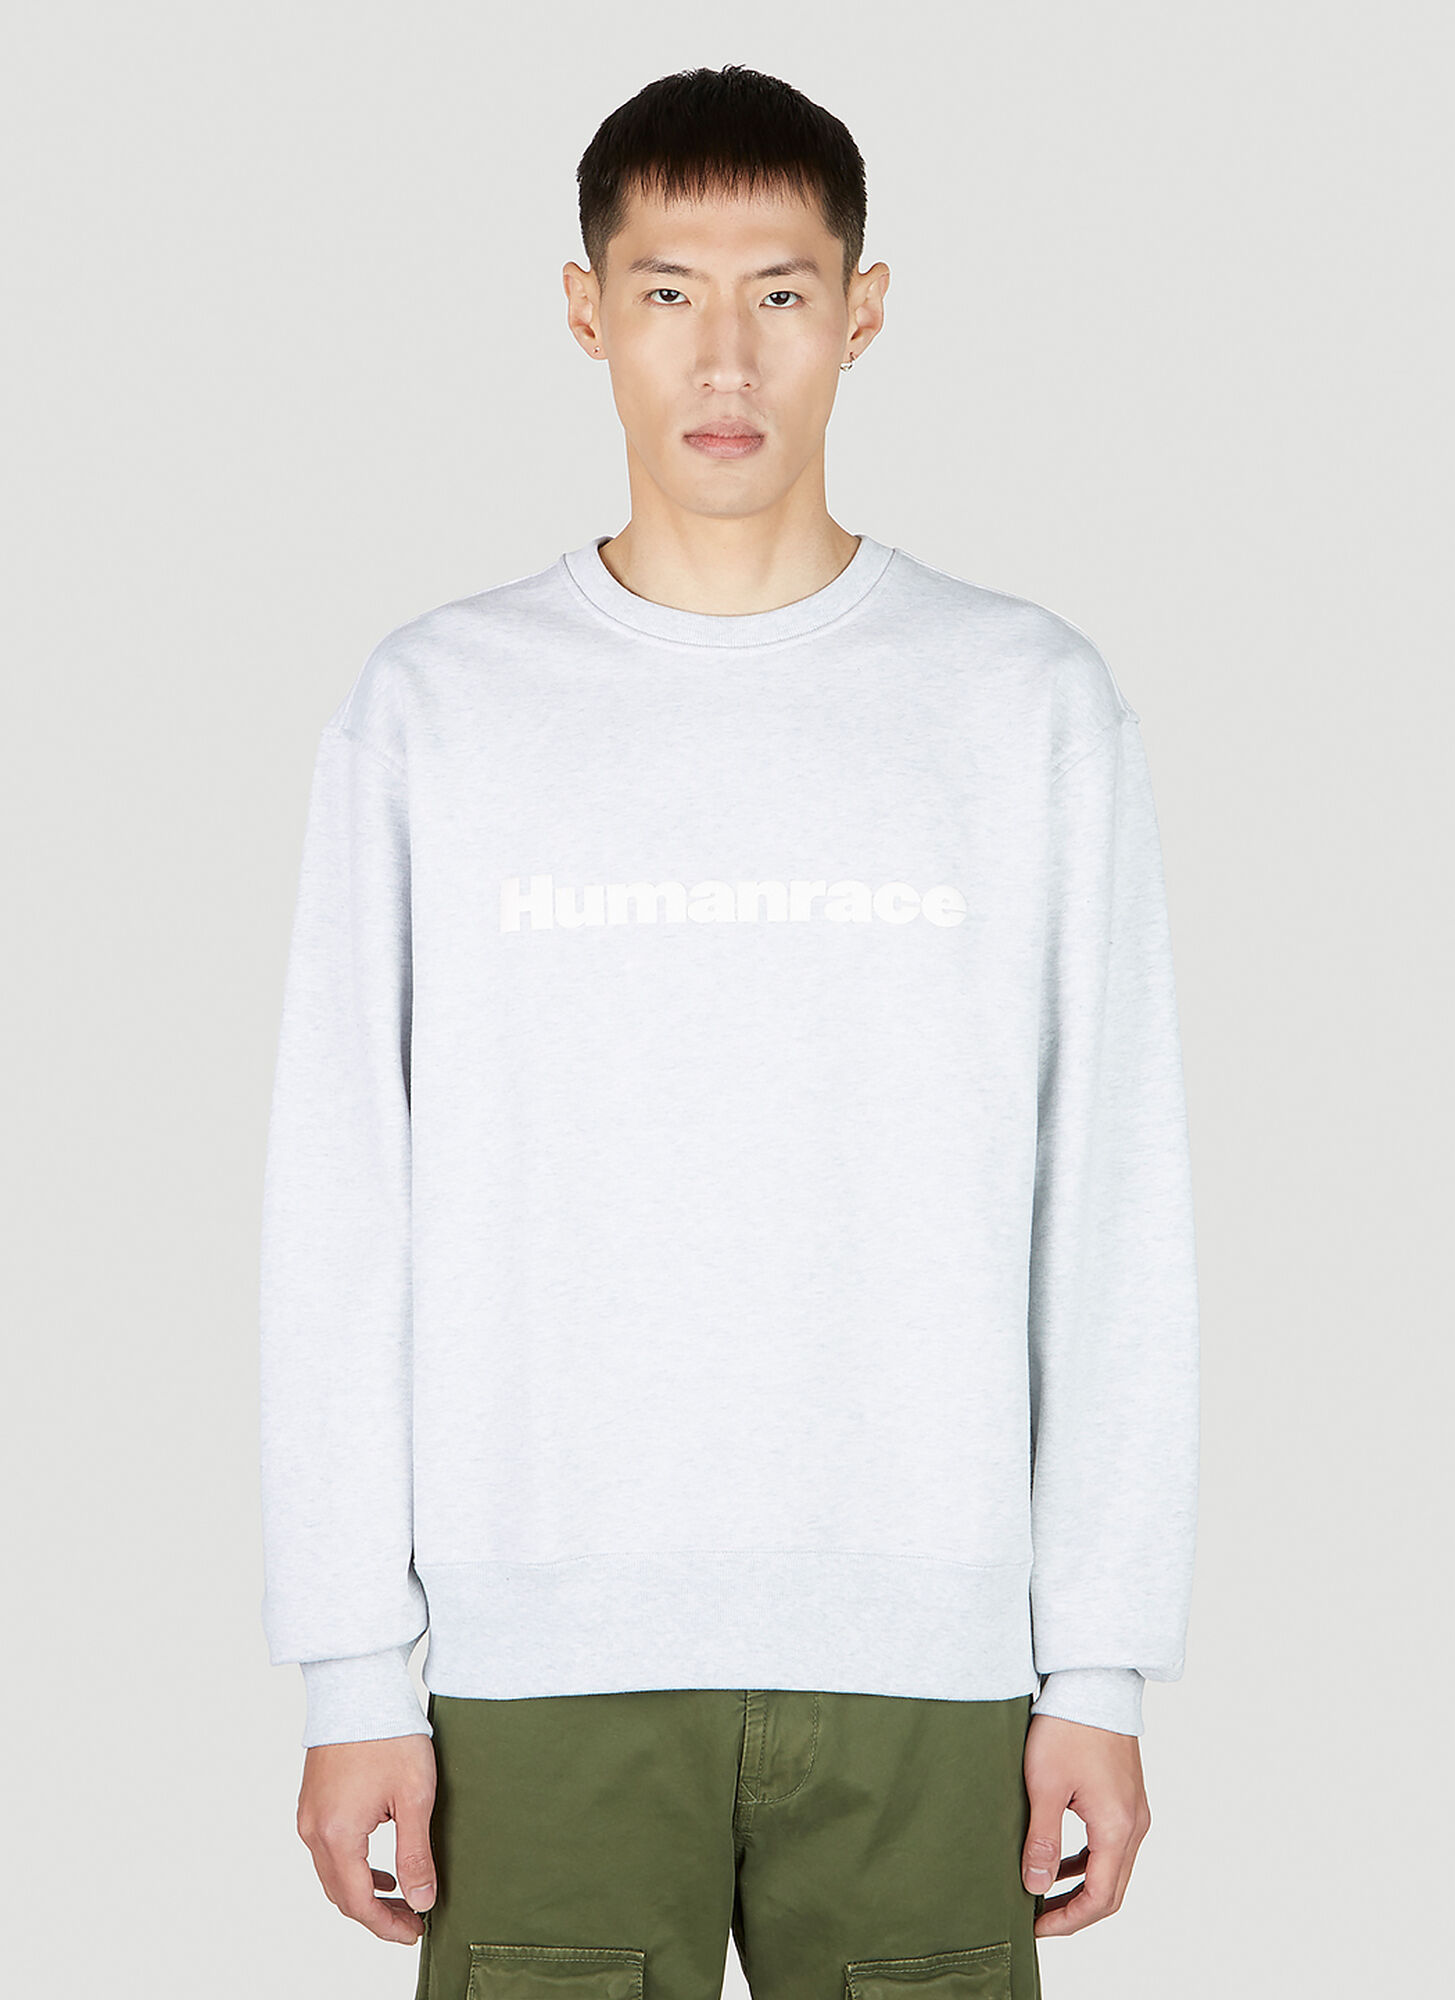 Adidas X Humanrace Basics Sweatshirt In Grey